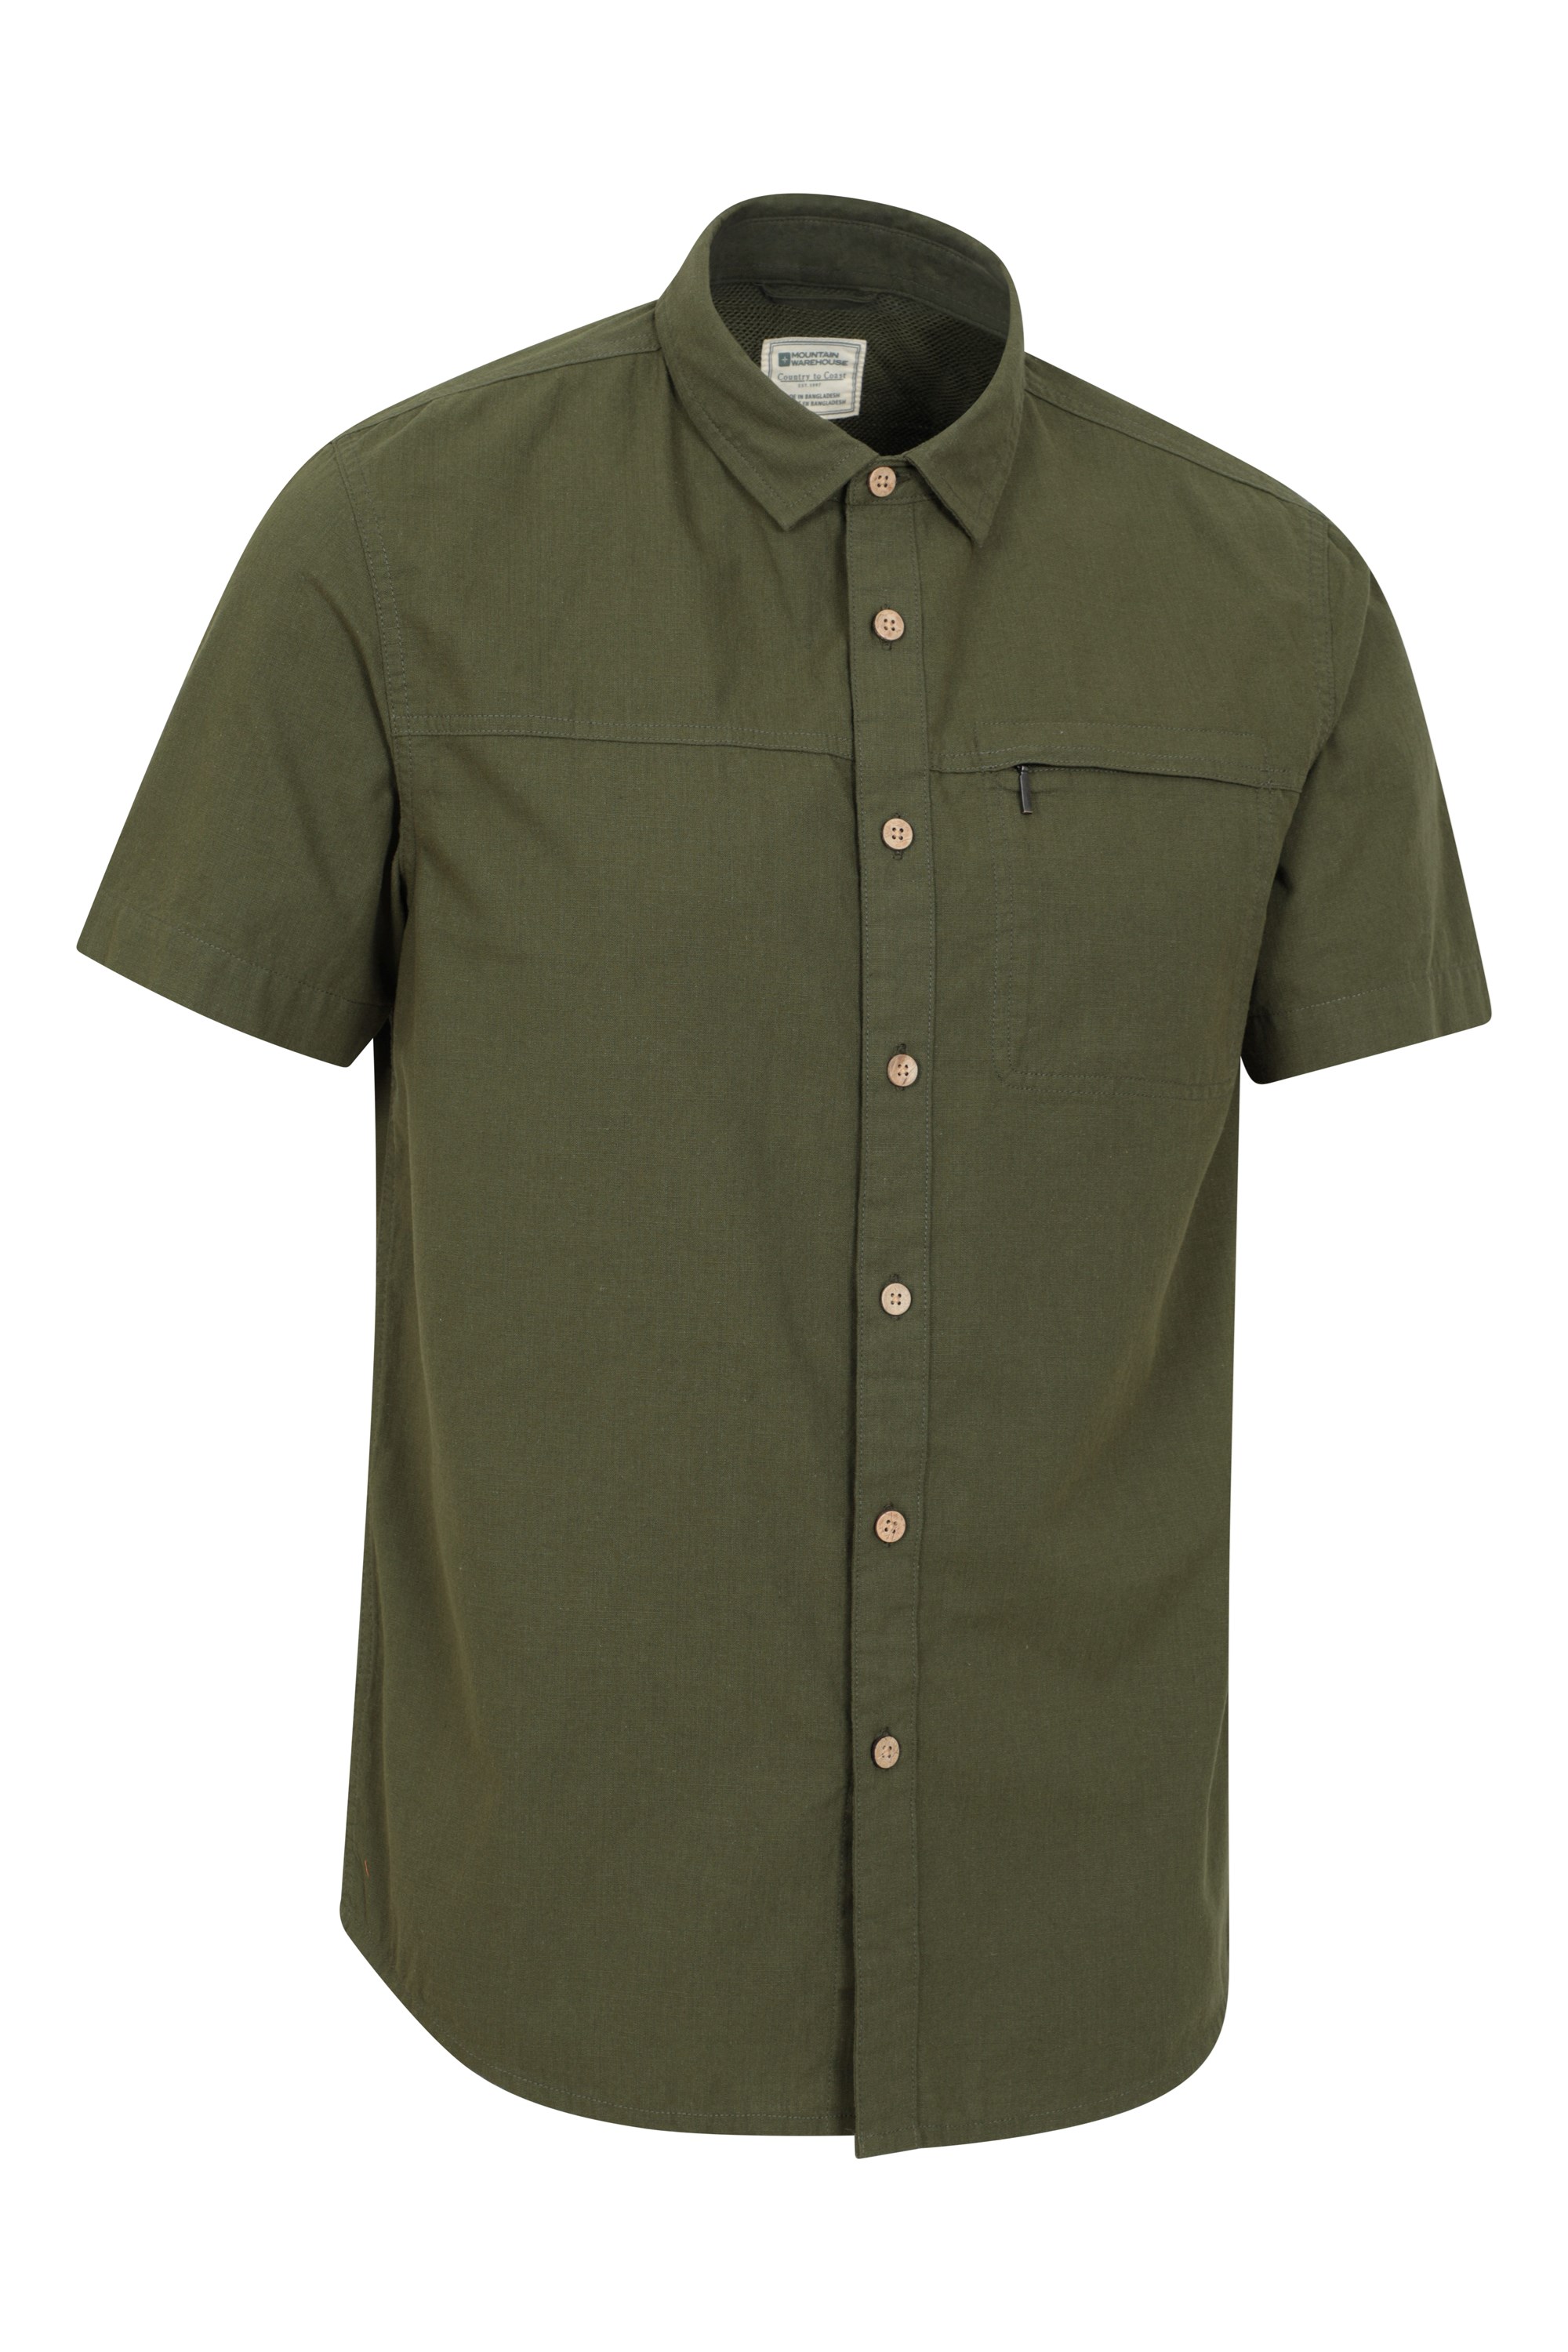 Mountain Warehouse Beach Mens Short Sleeve Shirt - Black | Size S